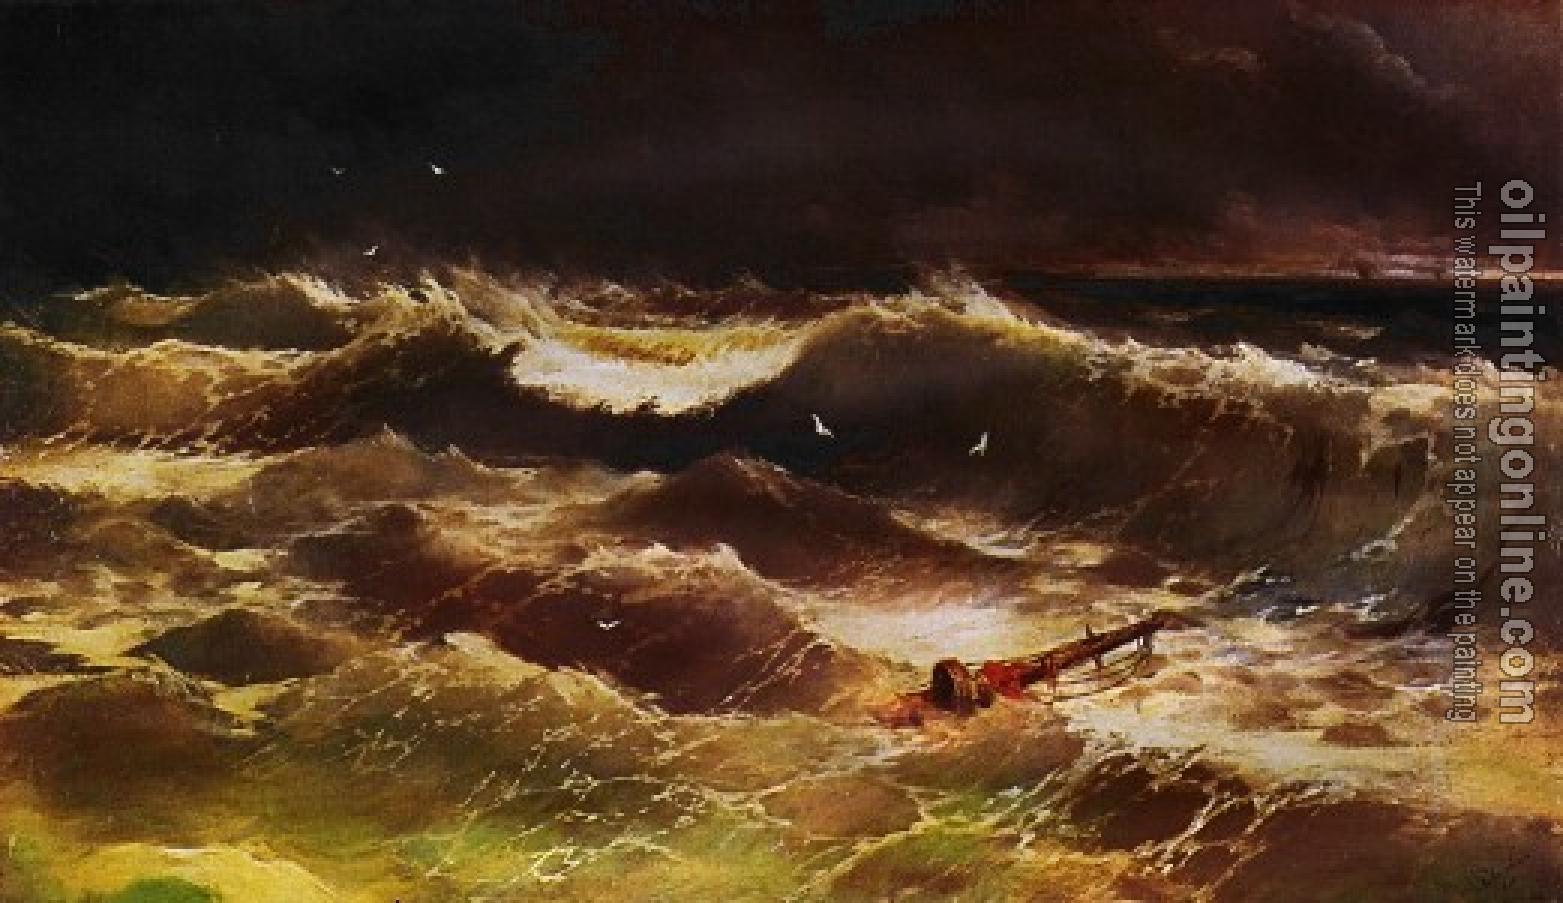 Aivazovsky, Ivan Constantinovich - Storm